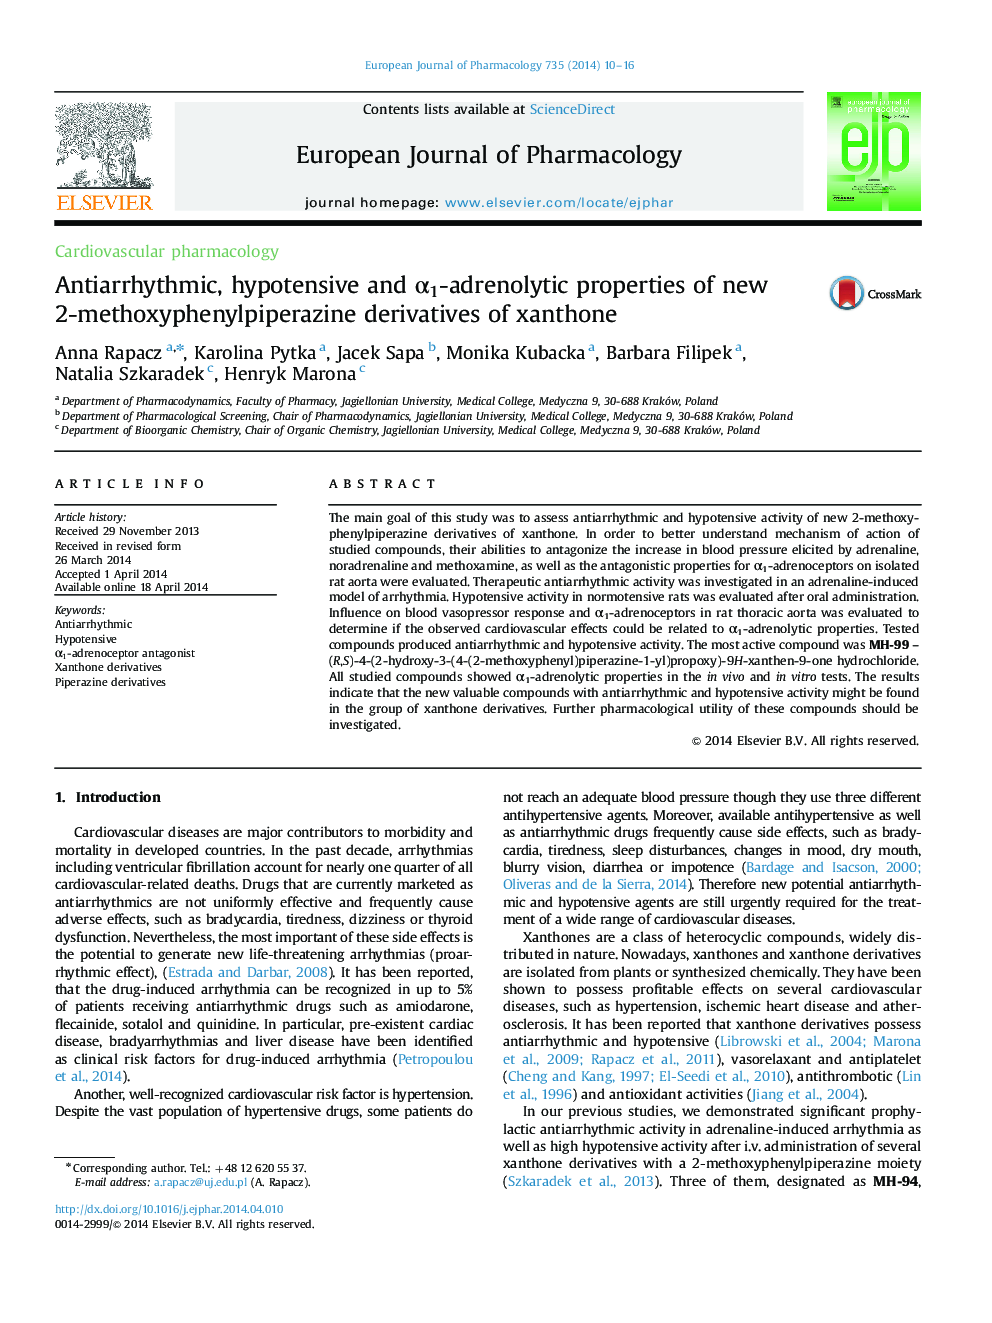 Antiarrhythmic, hypotensive and Î±1-adrenolytic properties of new 2-methoxyphenylpiperazine derivatives of xanthone